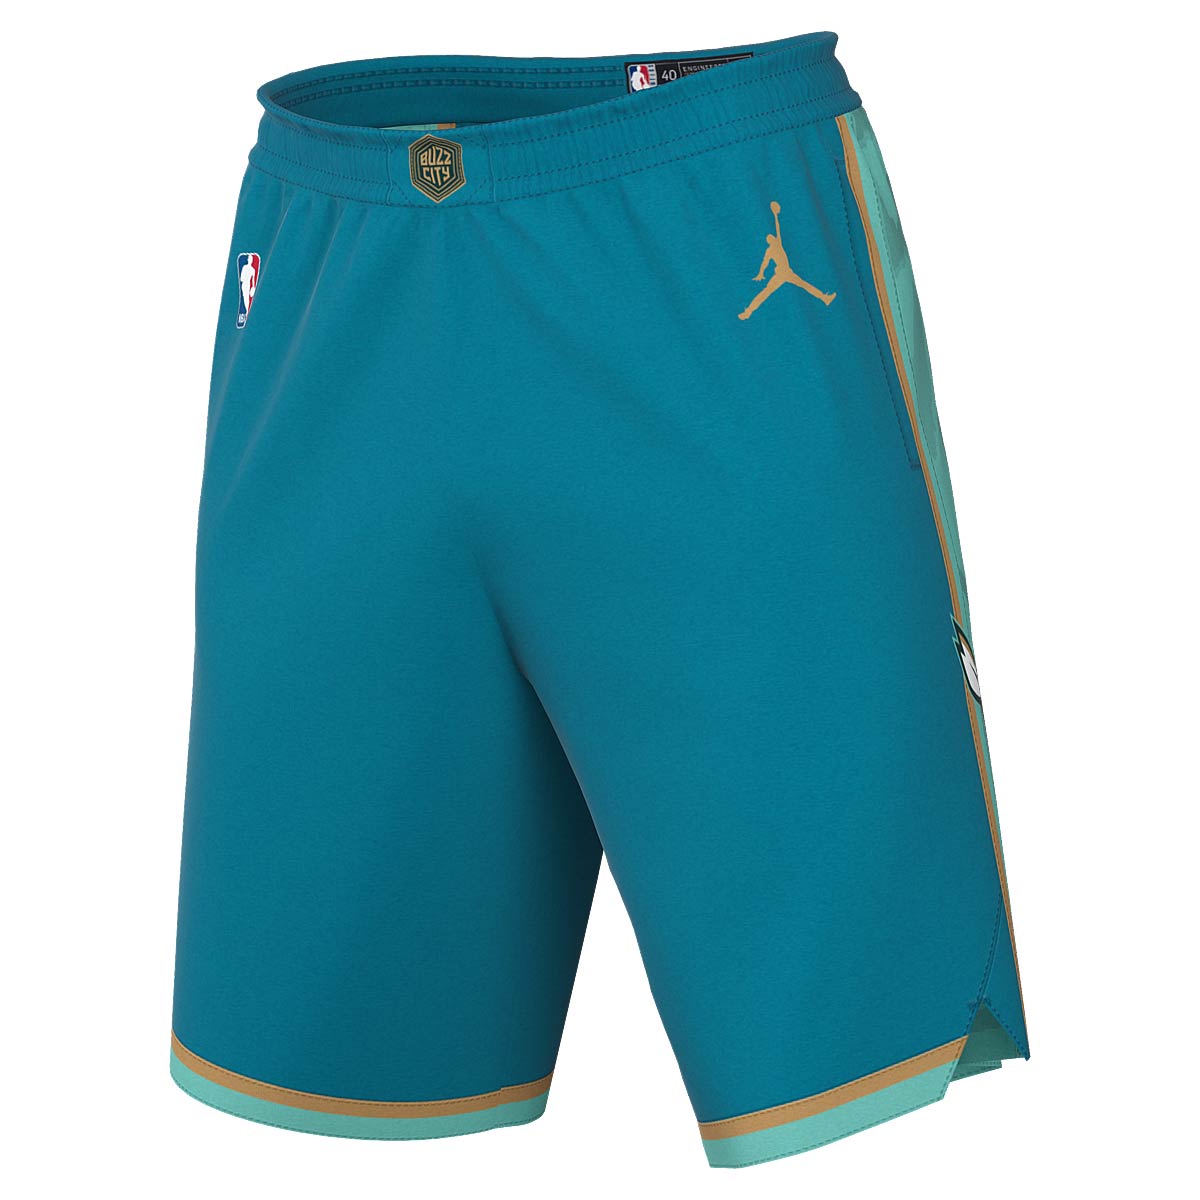 Jordan NBA Charlotte Hornets City Edition Swingman Shorts, Rapid Teal/schwarz/schwarz M